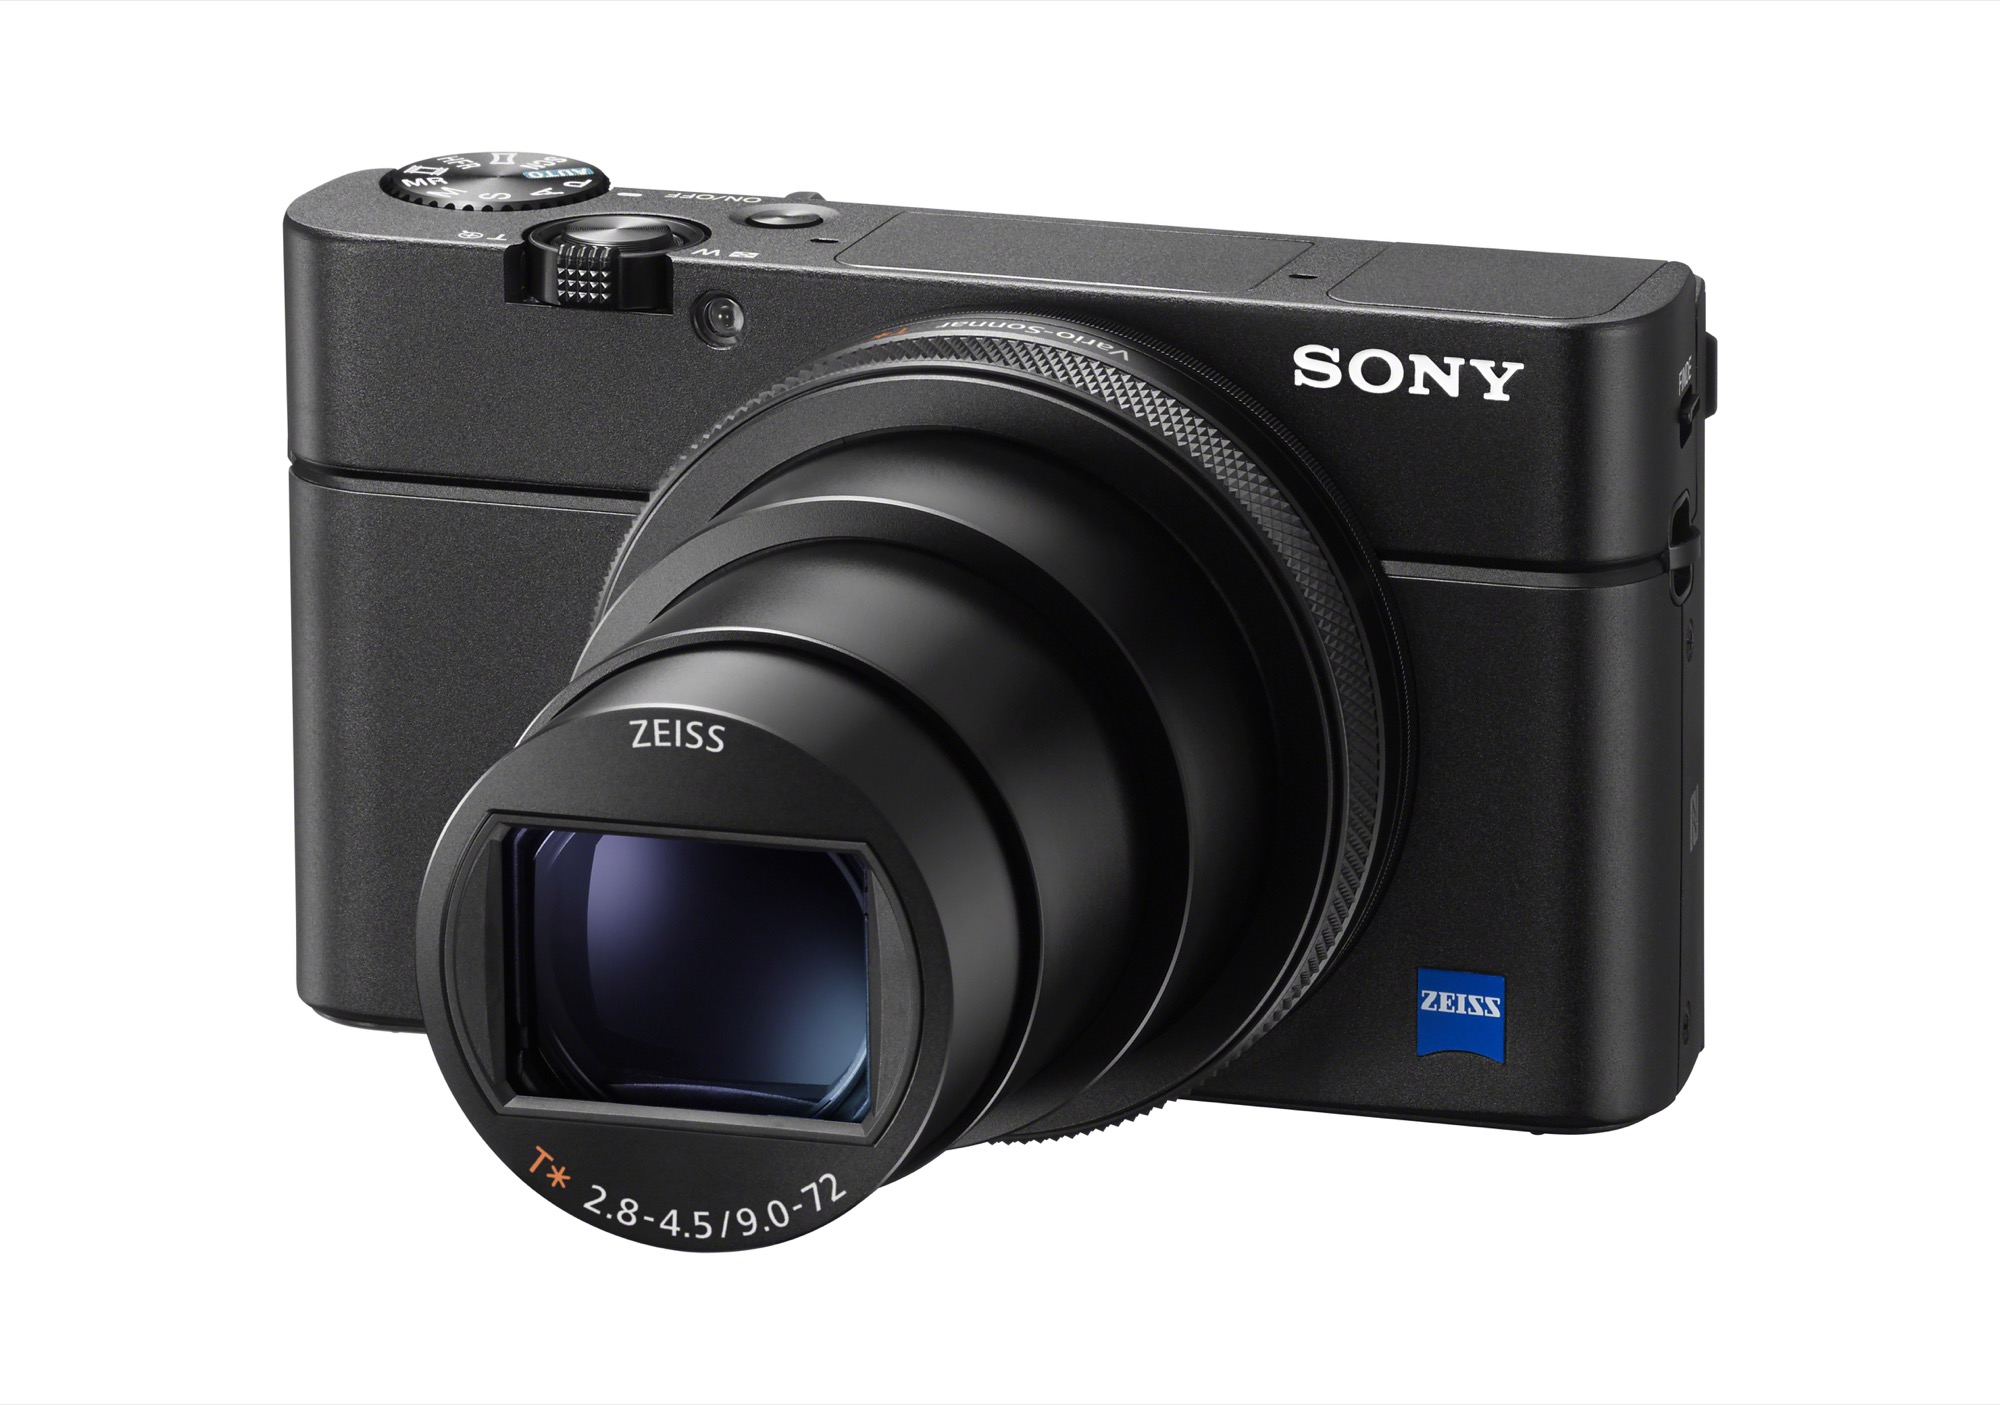 SONY RX100M6 compact camera